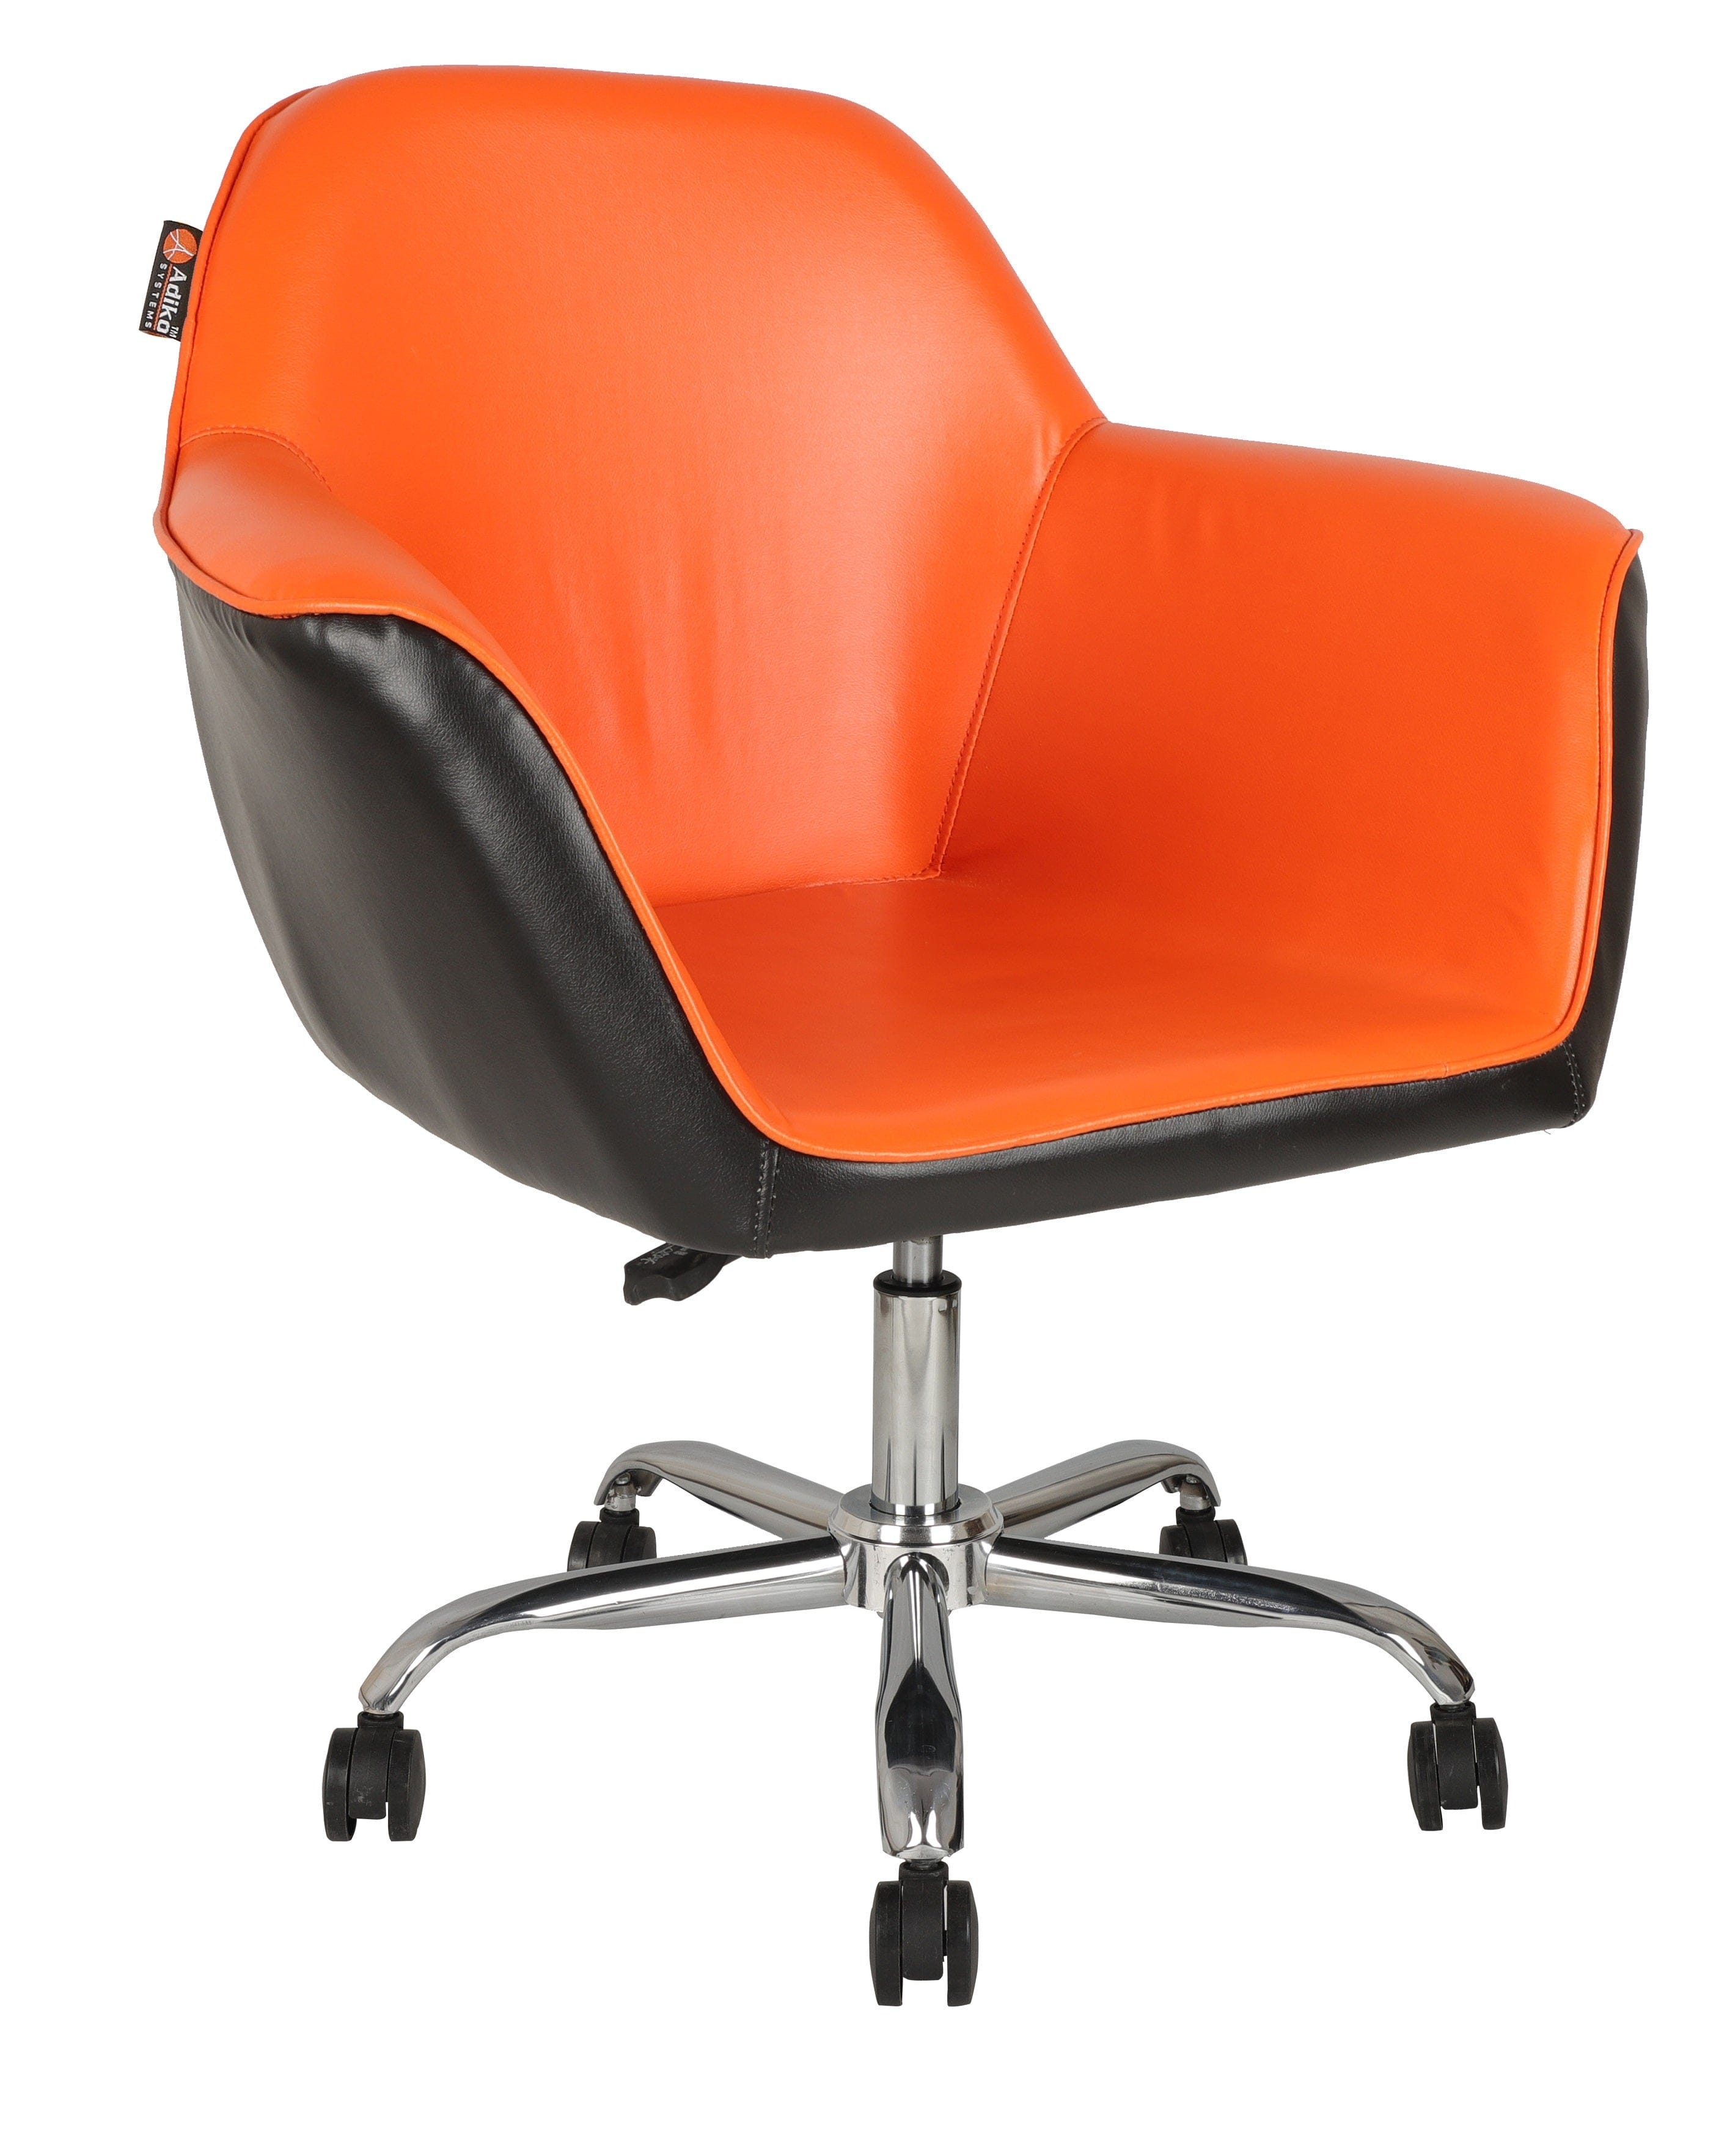 Adiko Lounge Chair in Orange / Black Color